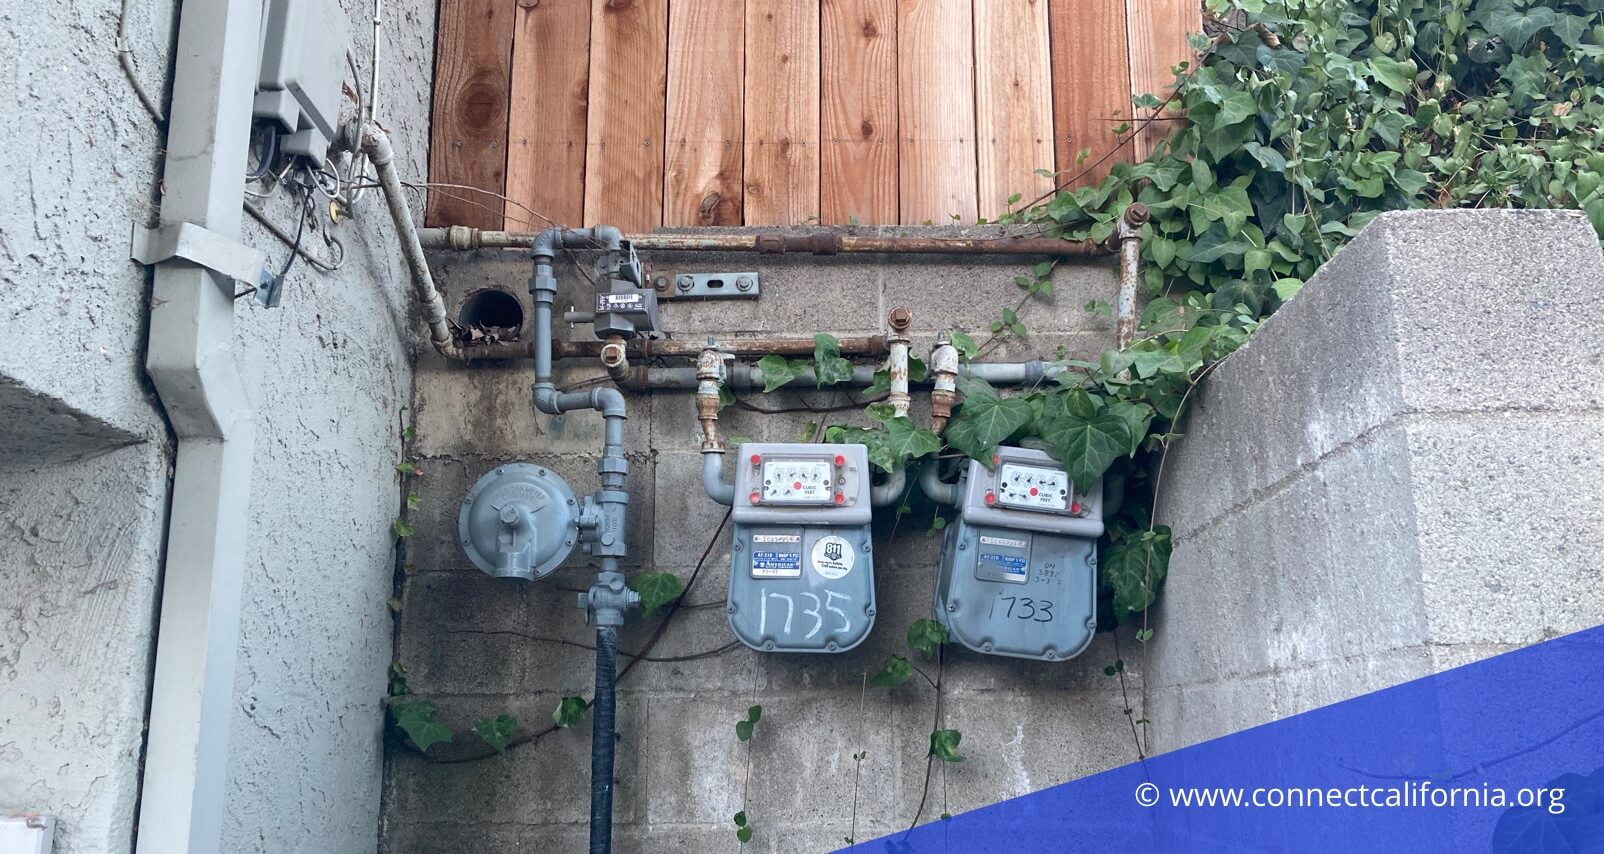 Water meters in California.